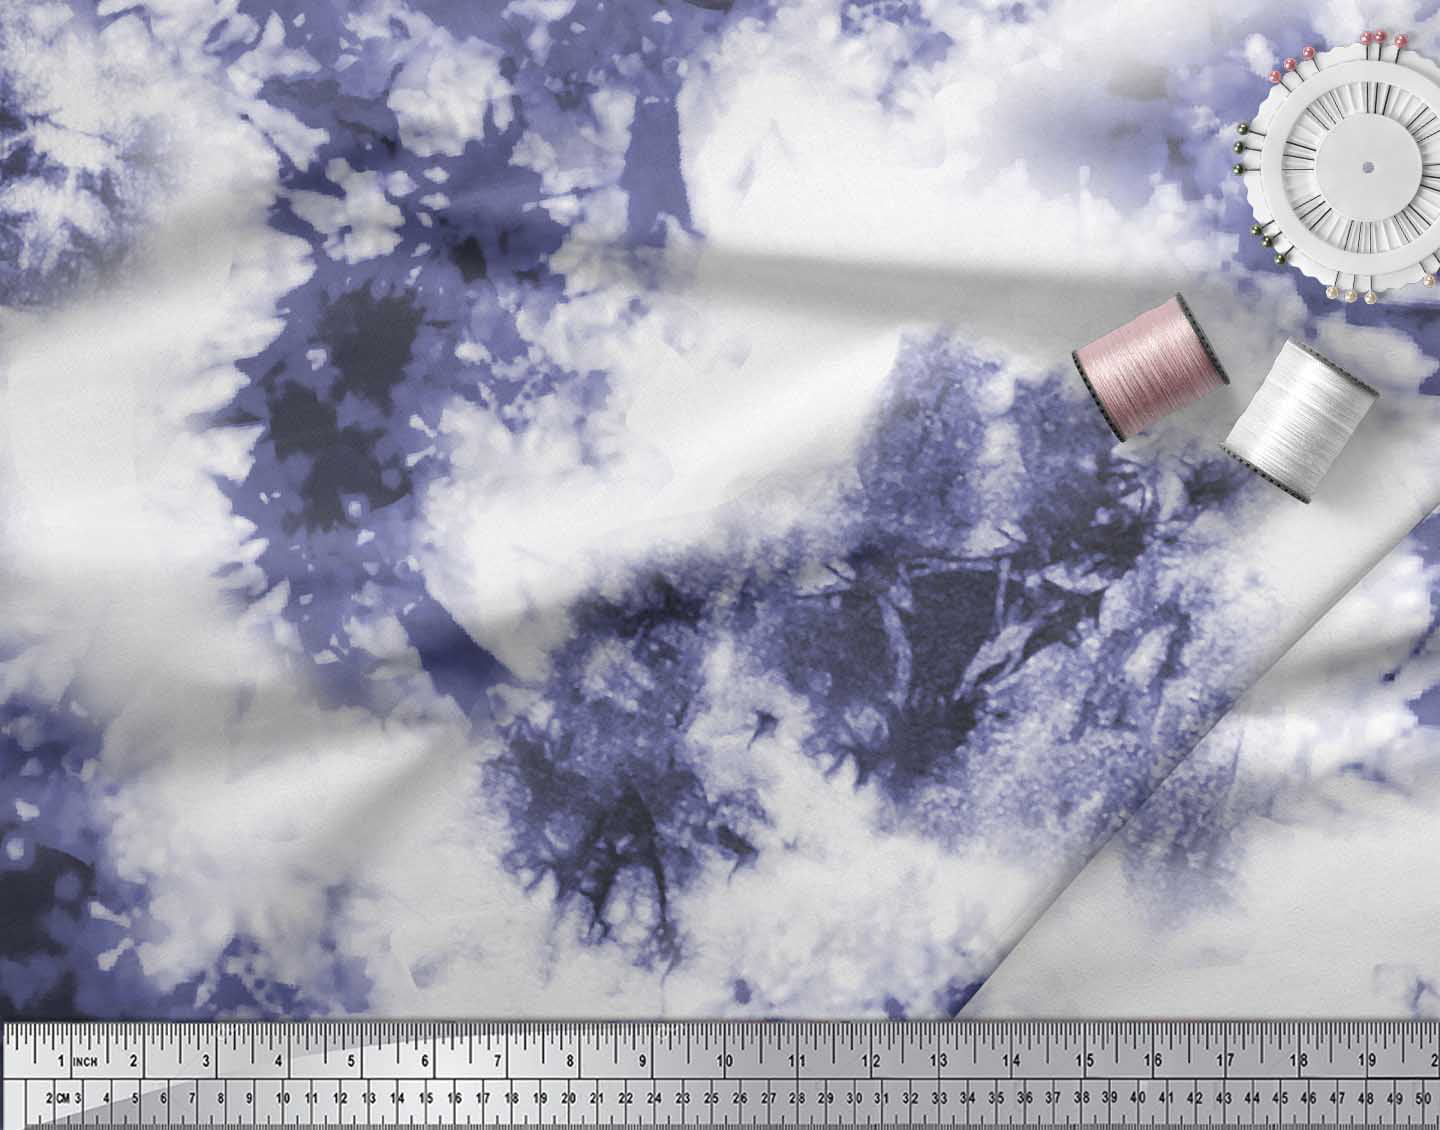  Soimoi Cotton Voile Purple Fabric - by The Yard - 42 Inch Wide  - Batik Tie & Dye - Batik Bloom: Artistic Patterns in Tie & Dye Printed  Fabric